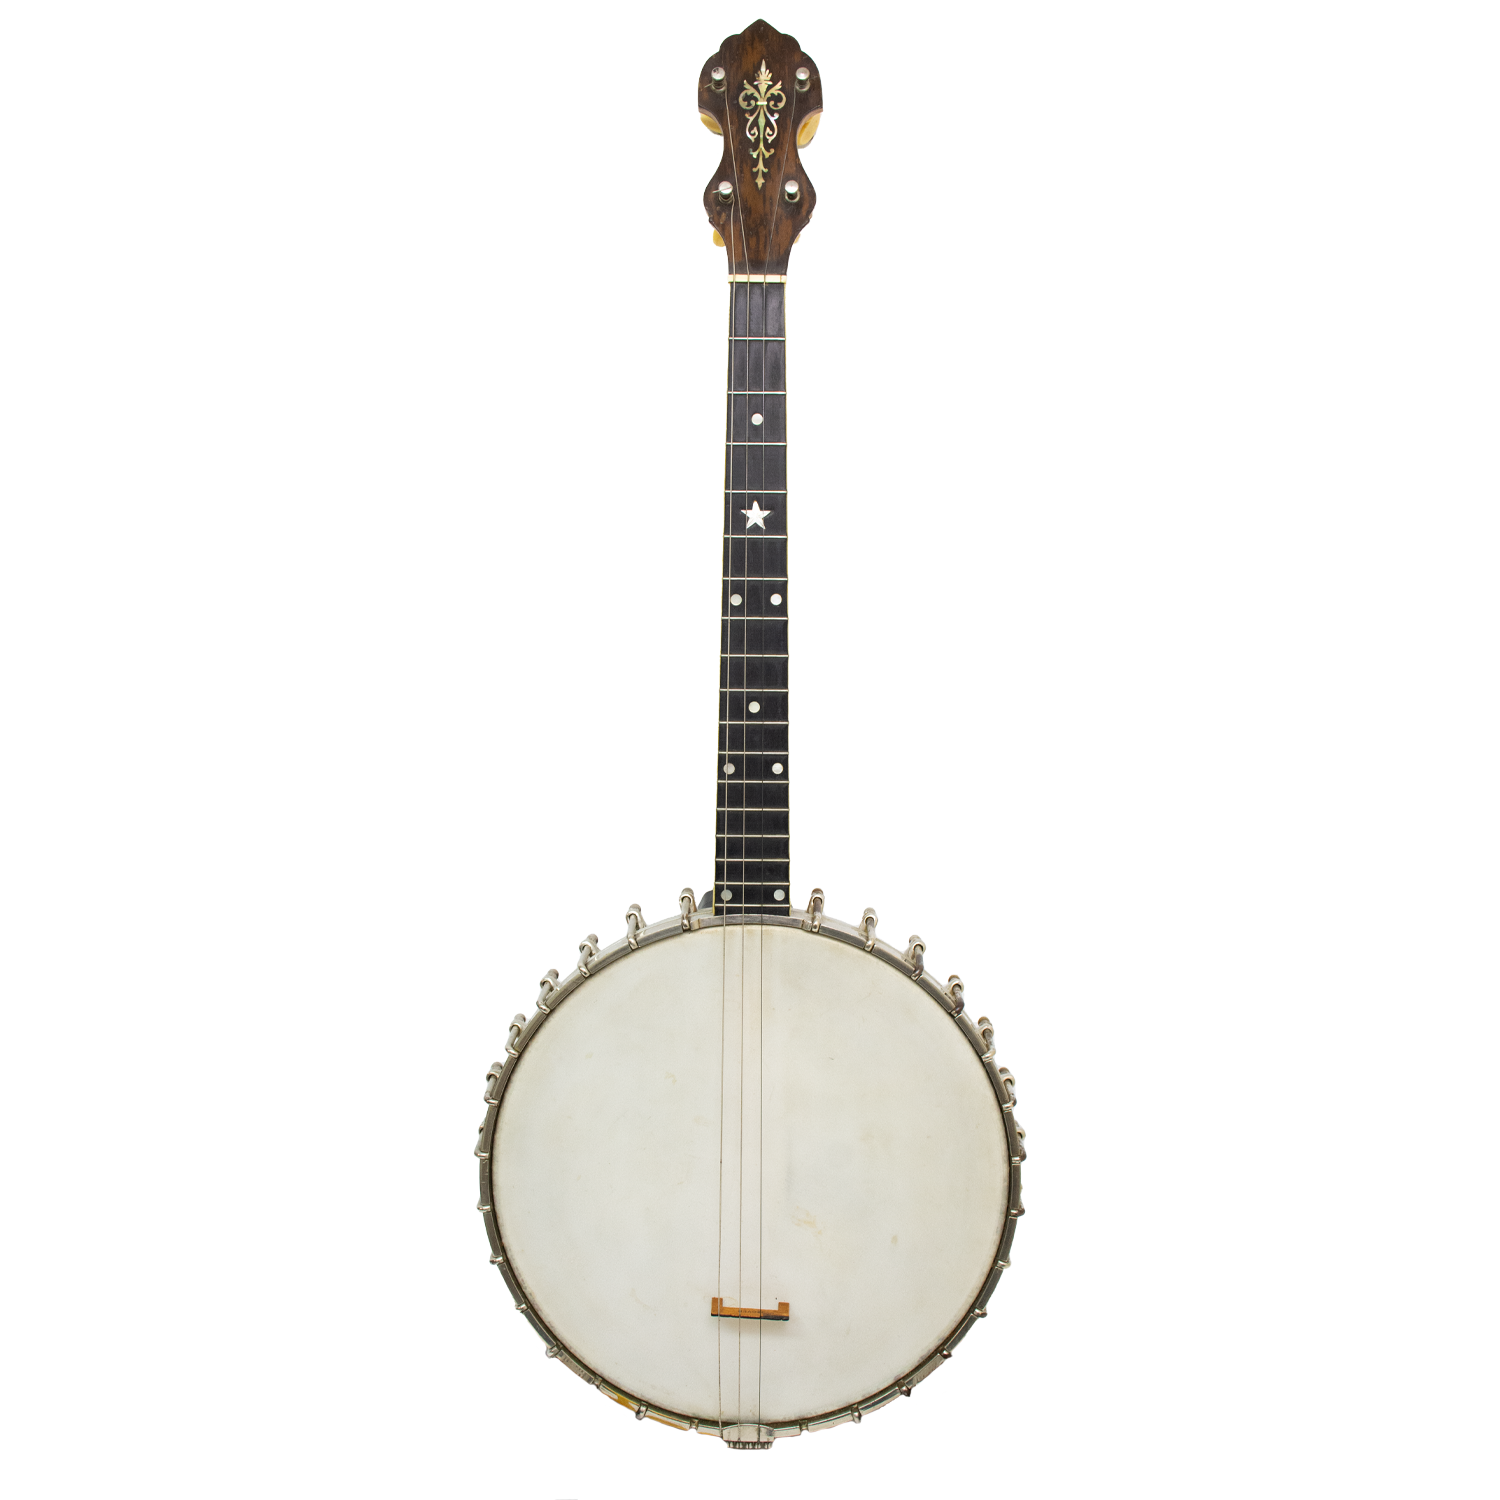 Tubaphone M Banjo - 1920s